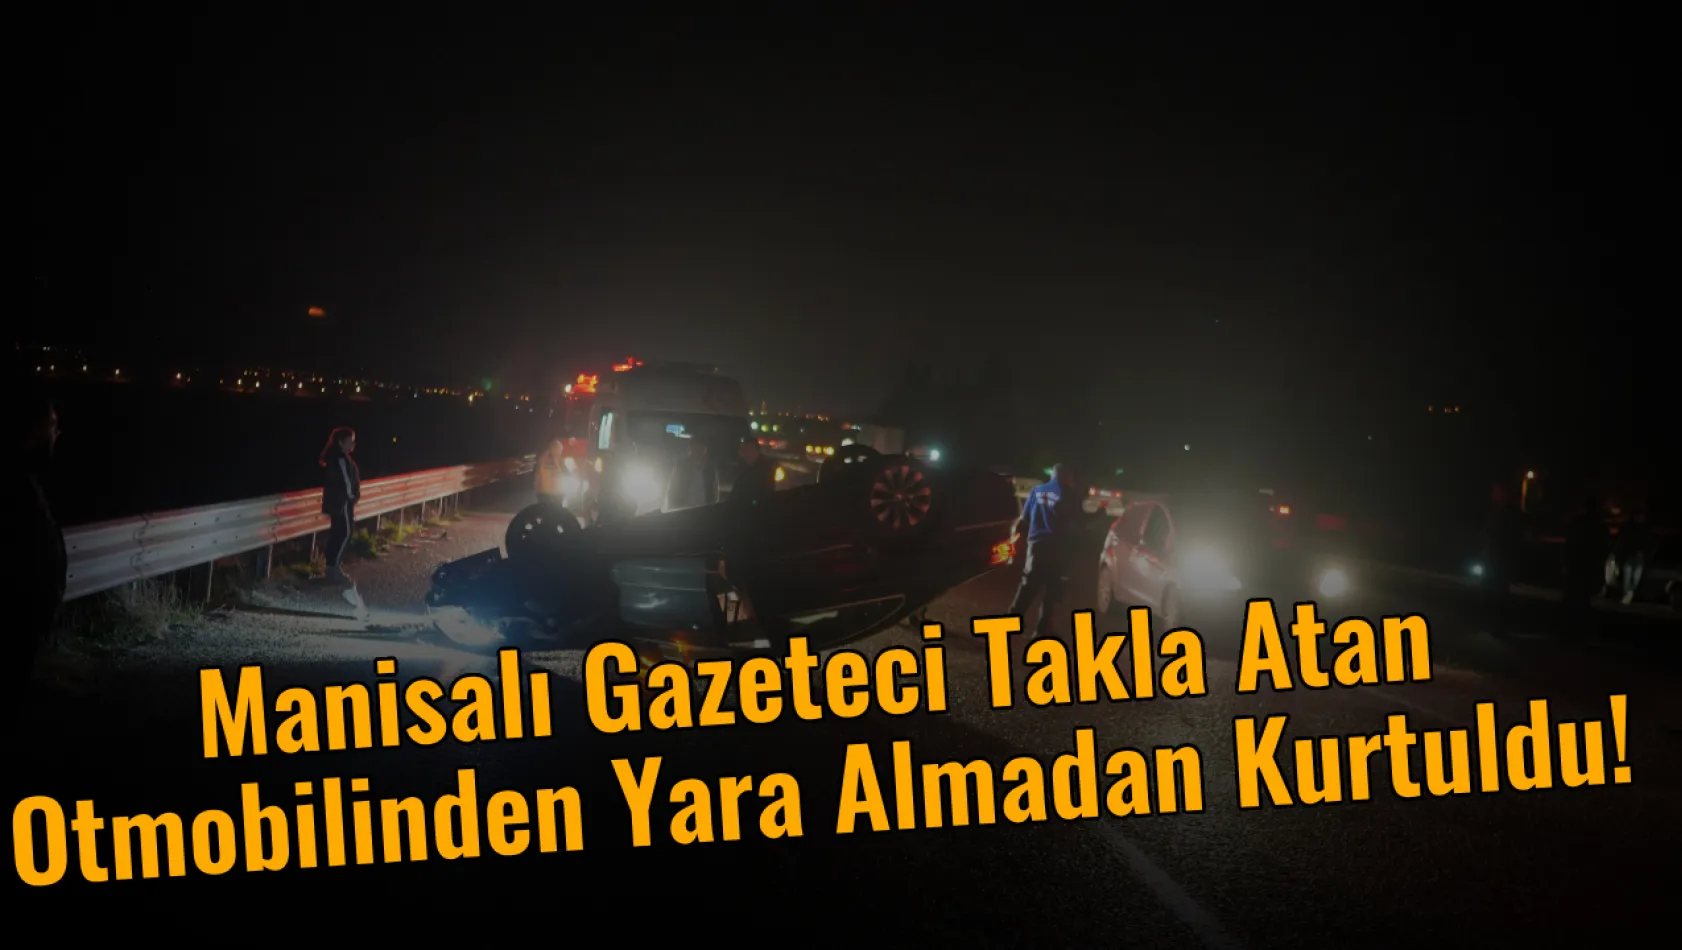 Manisalı Gazeteci Takla Atan Otmobilinden Yara Almadan Kurtuldu!